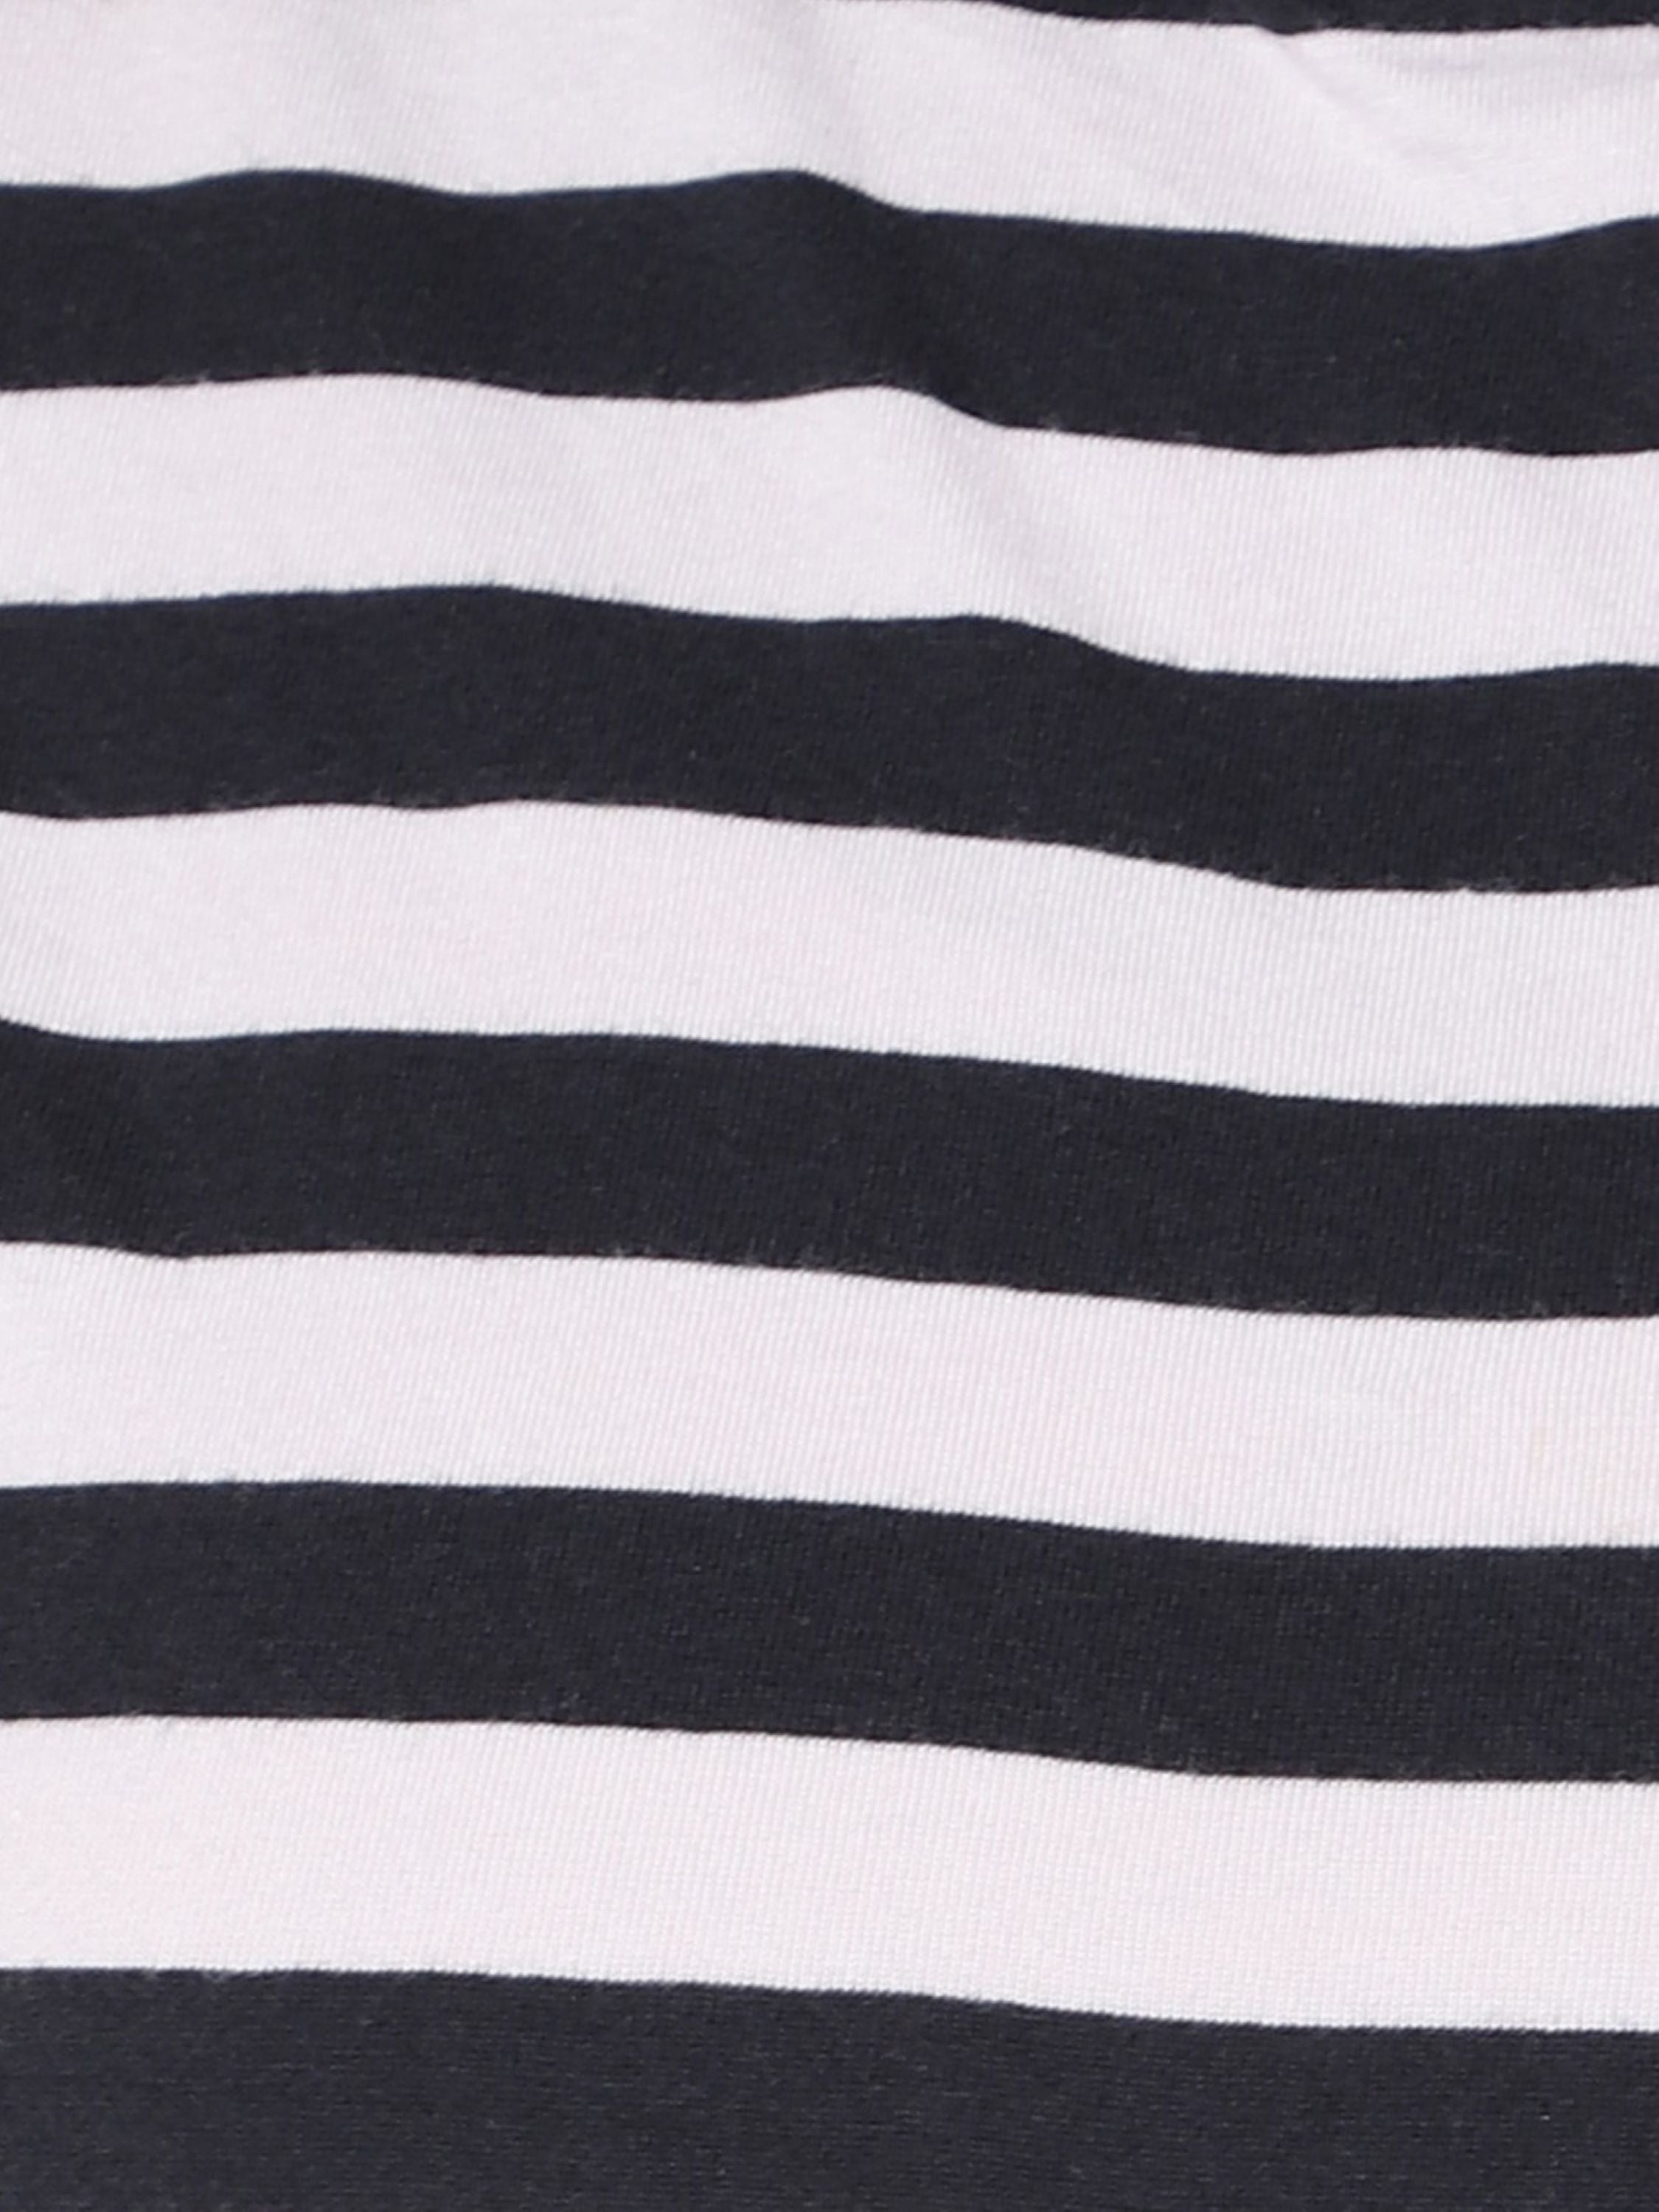 Girls Striped T-shirt Black & White